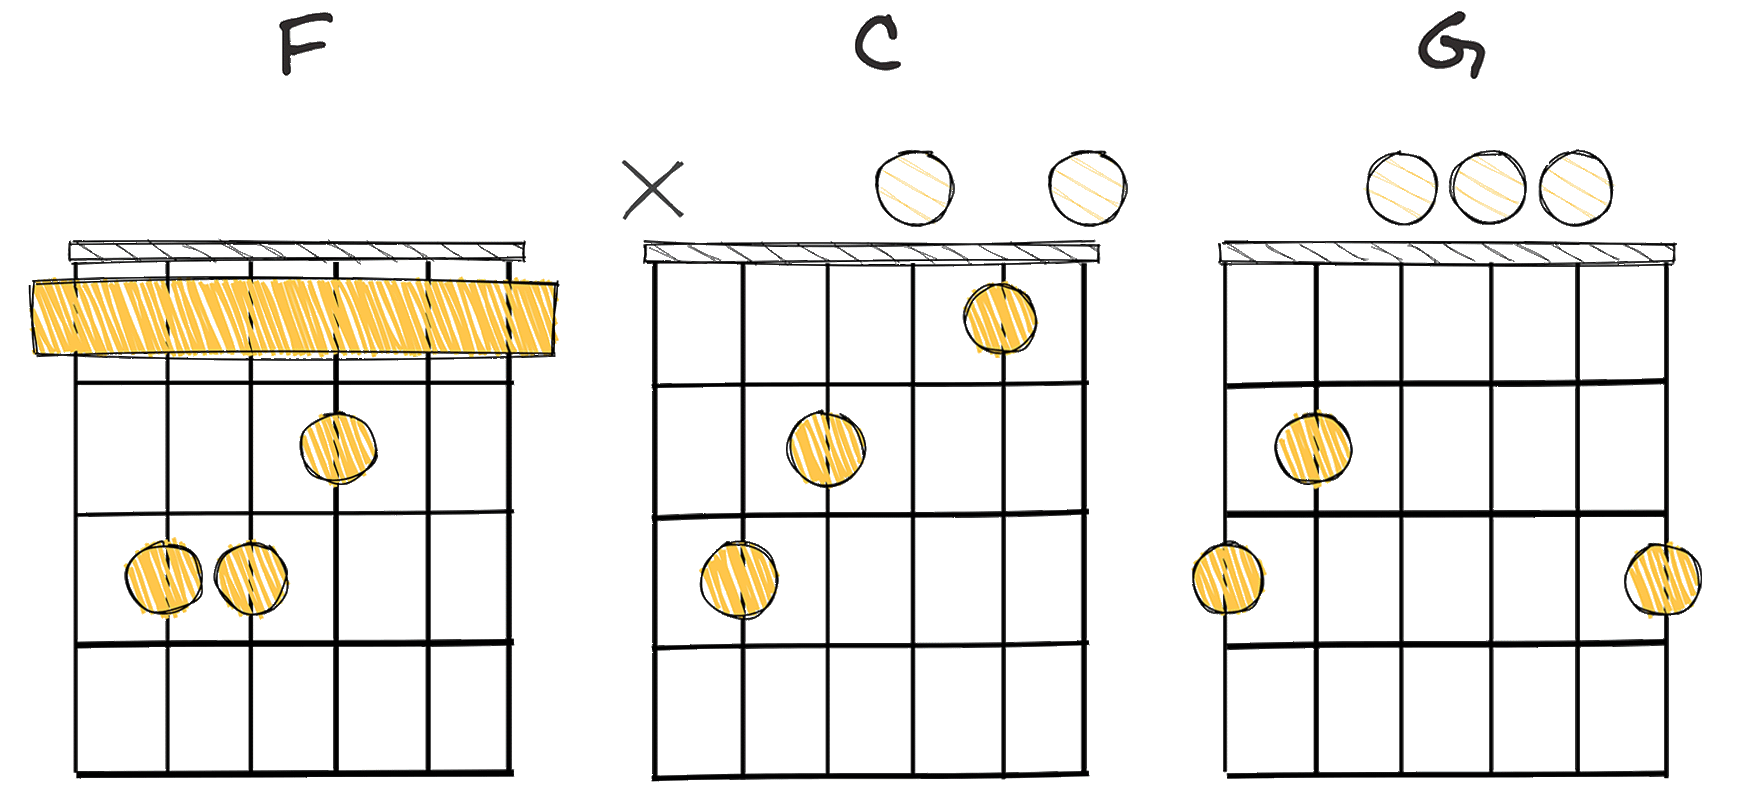 IV-I-V (4-1-5) chords diagram